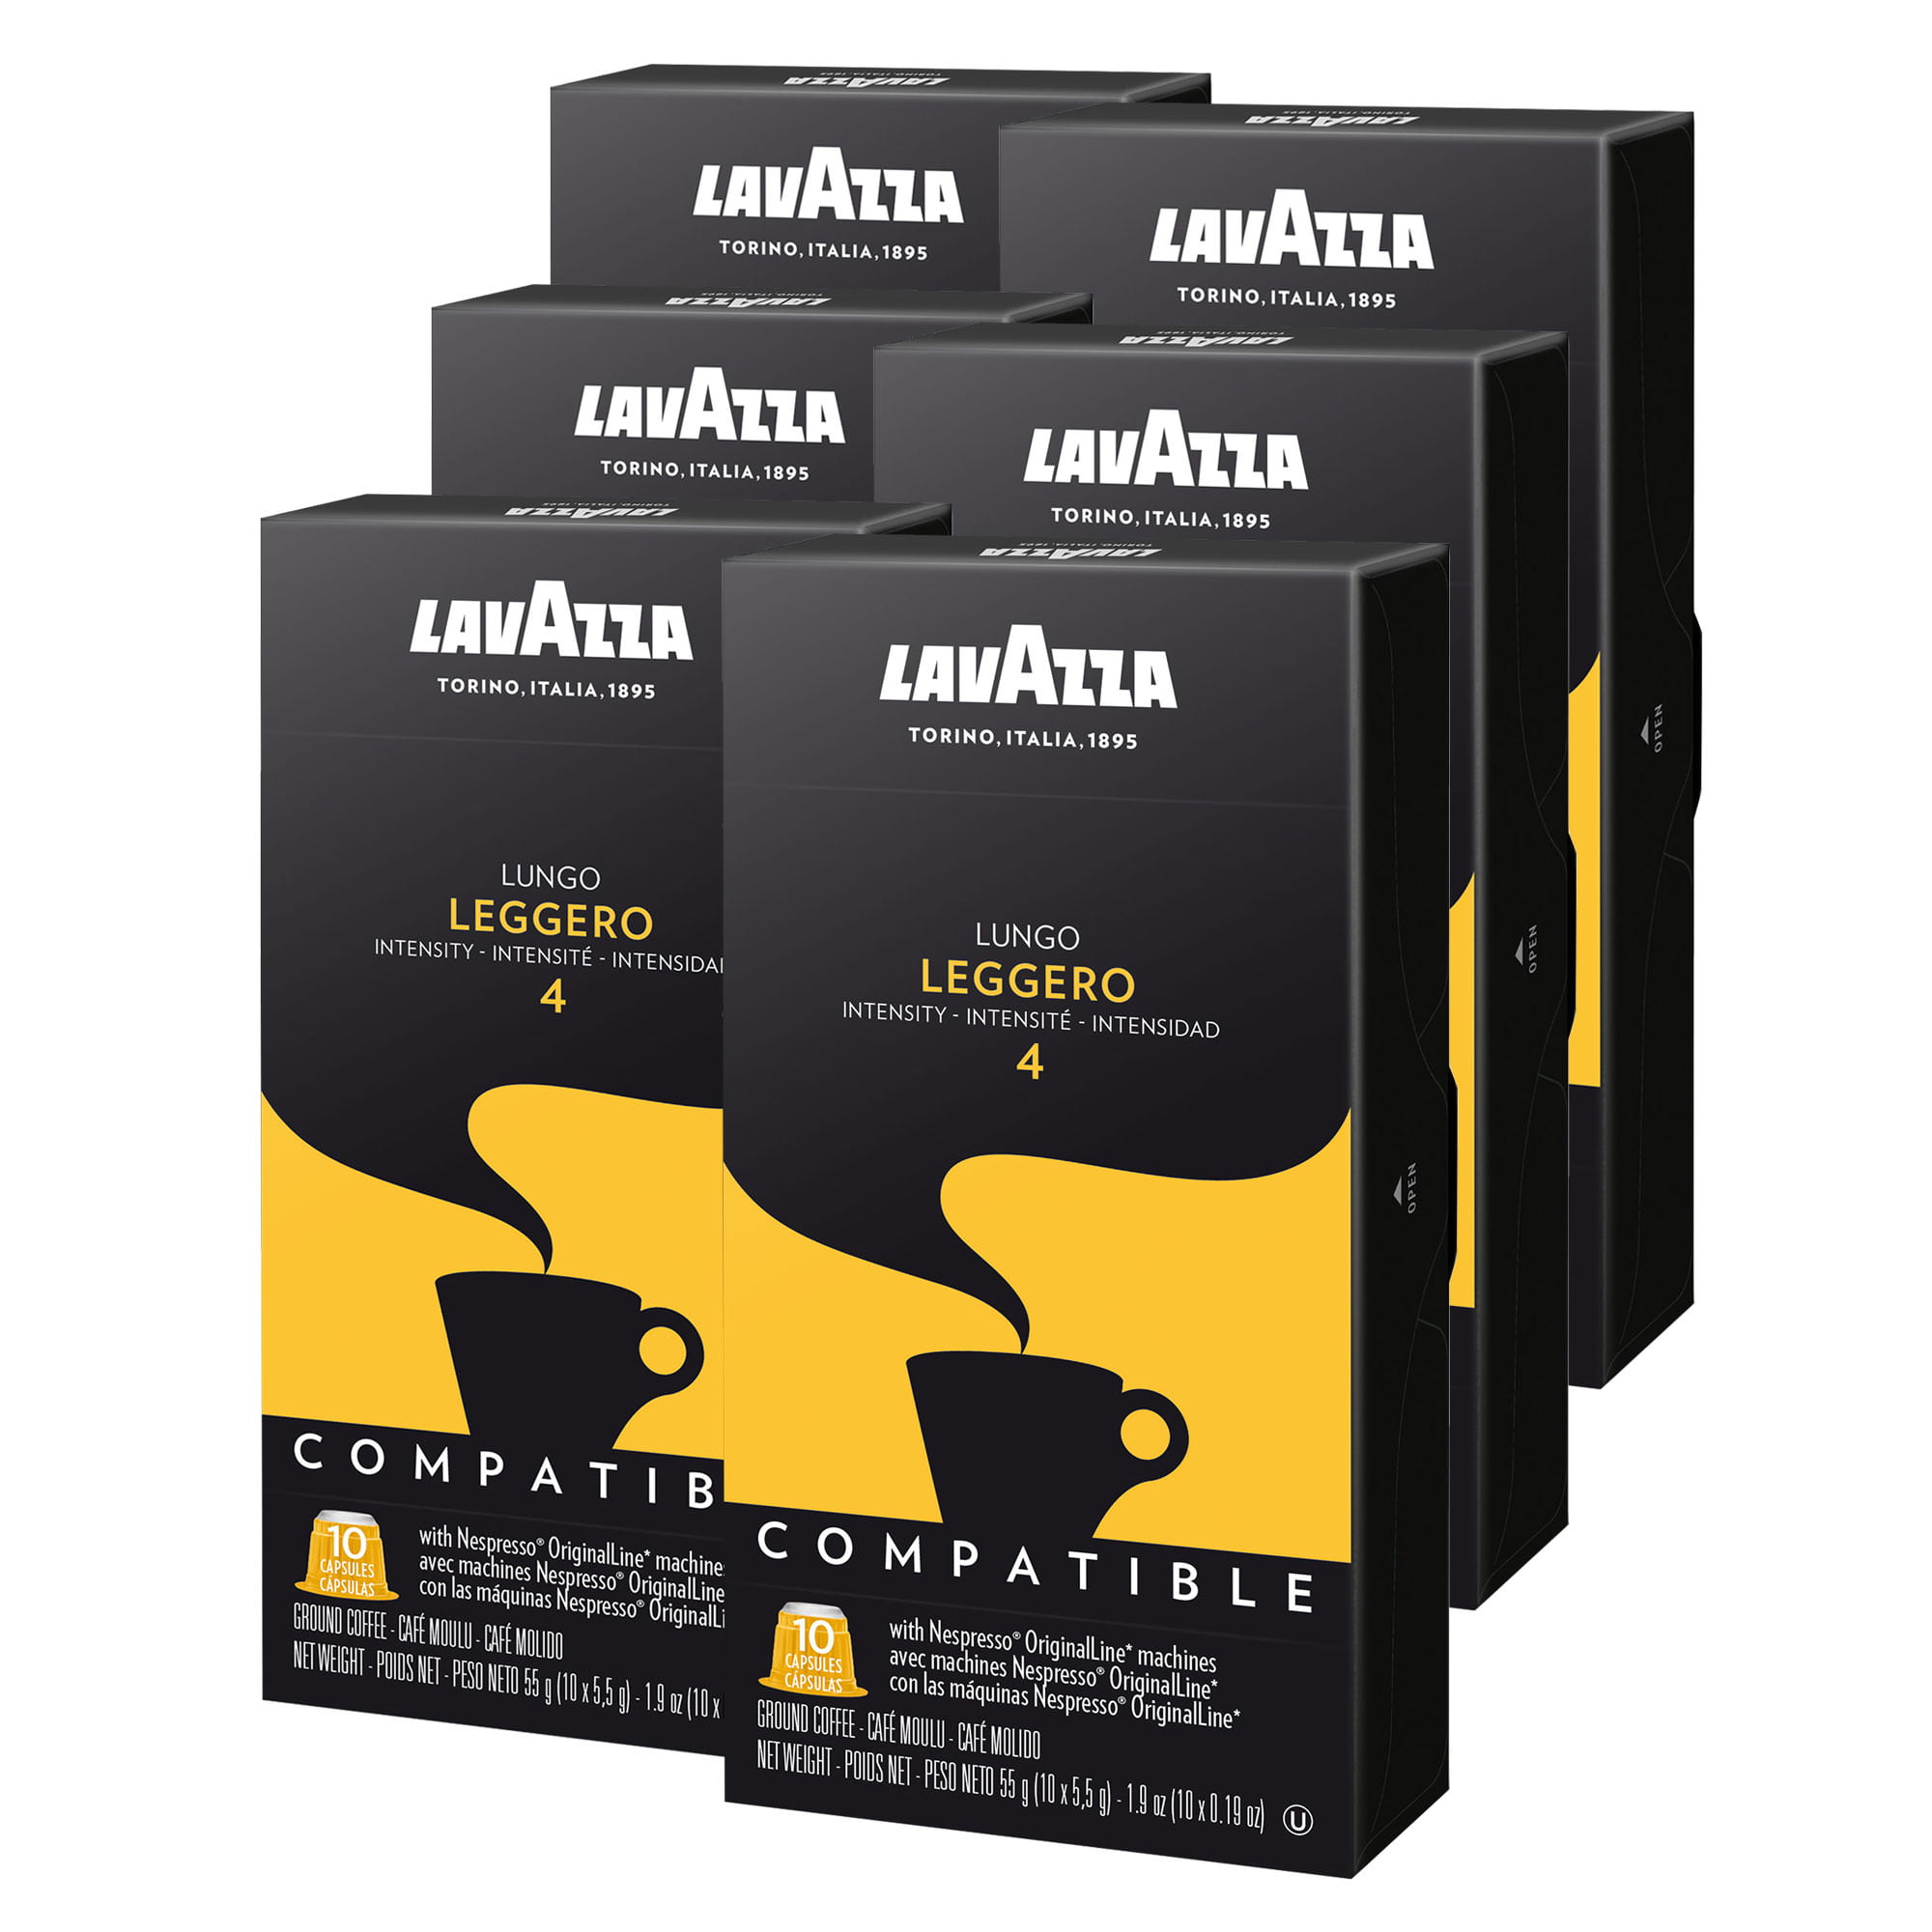 Café capsules espresso leggero compatible Nespresso, U (x 10)